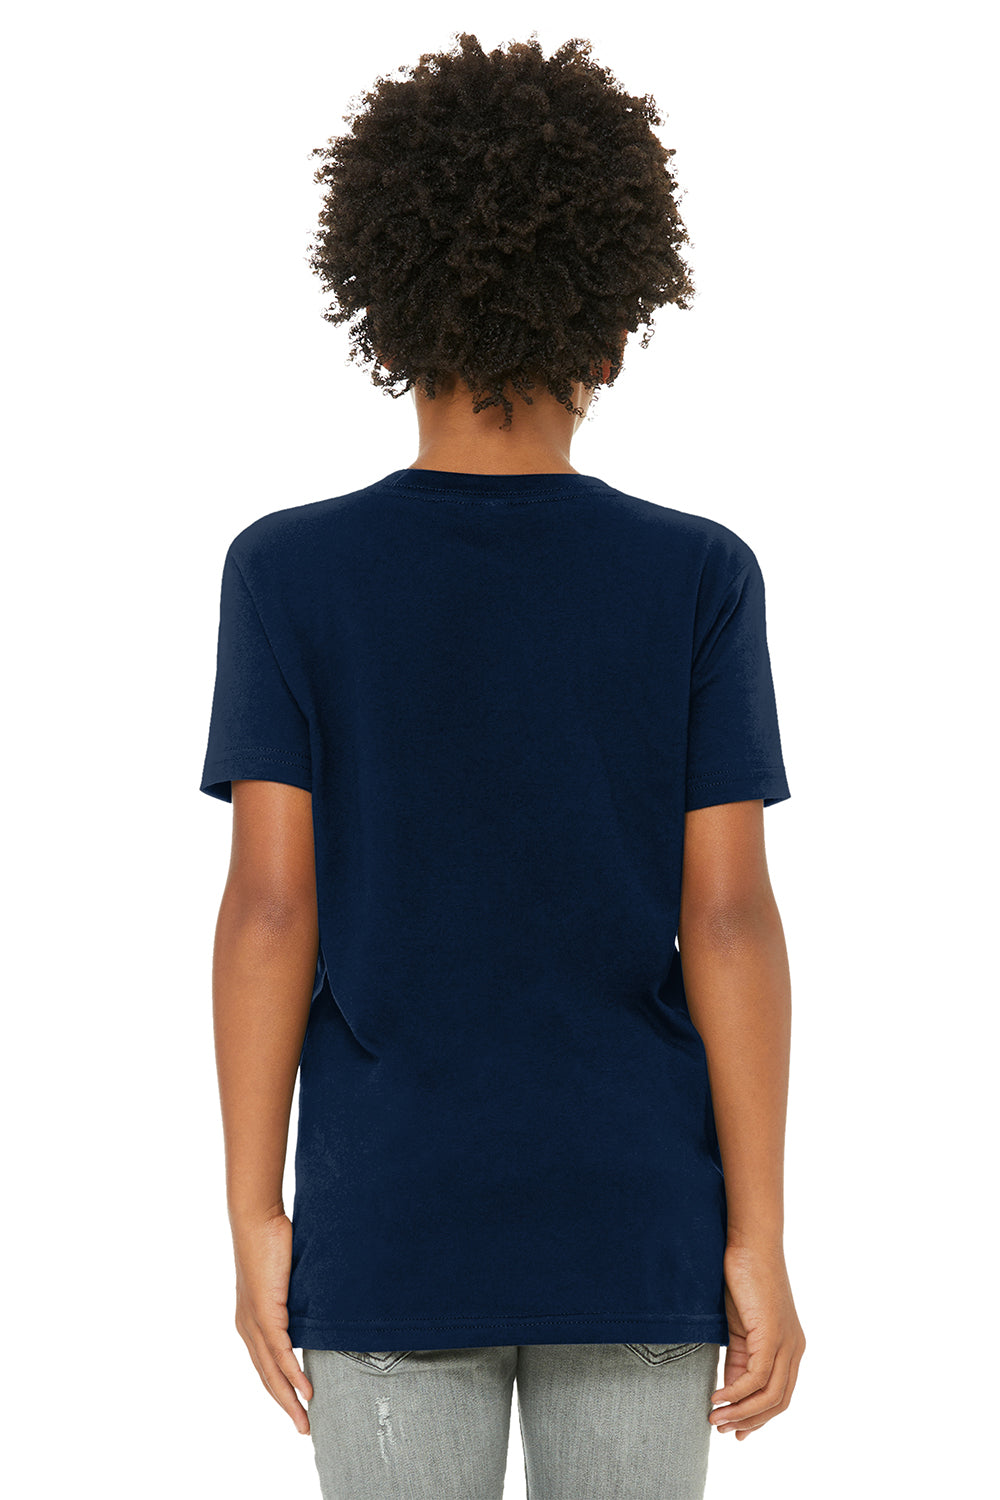 Bella + Canvas 3001Y Youth Jersey Short Sleeve Crewneck T-Shirt Navy Blue Model Back